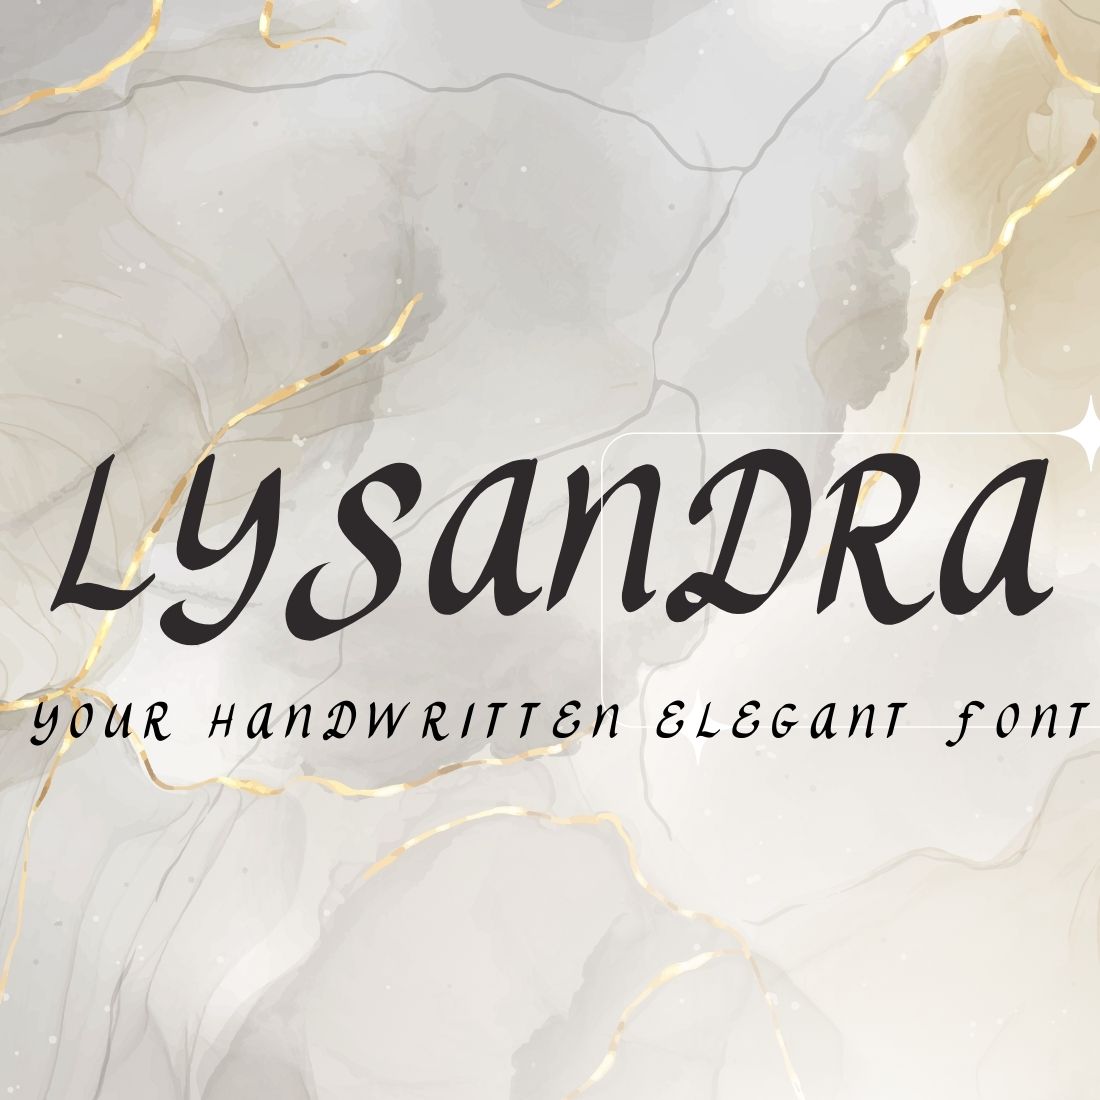 Lysandra Handwritten Font cover image.